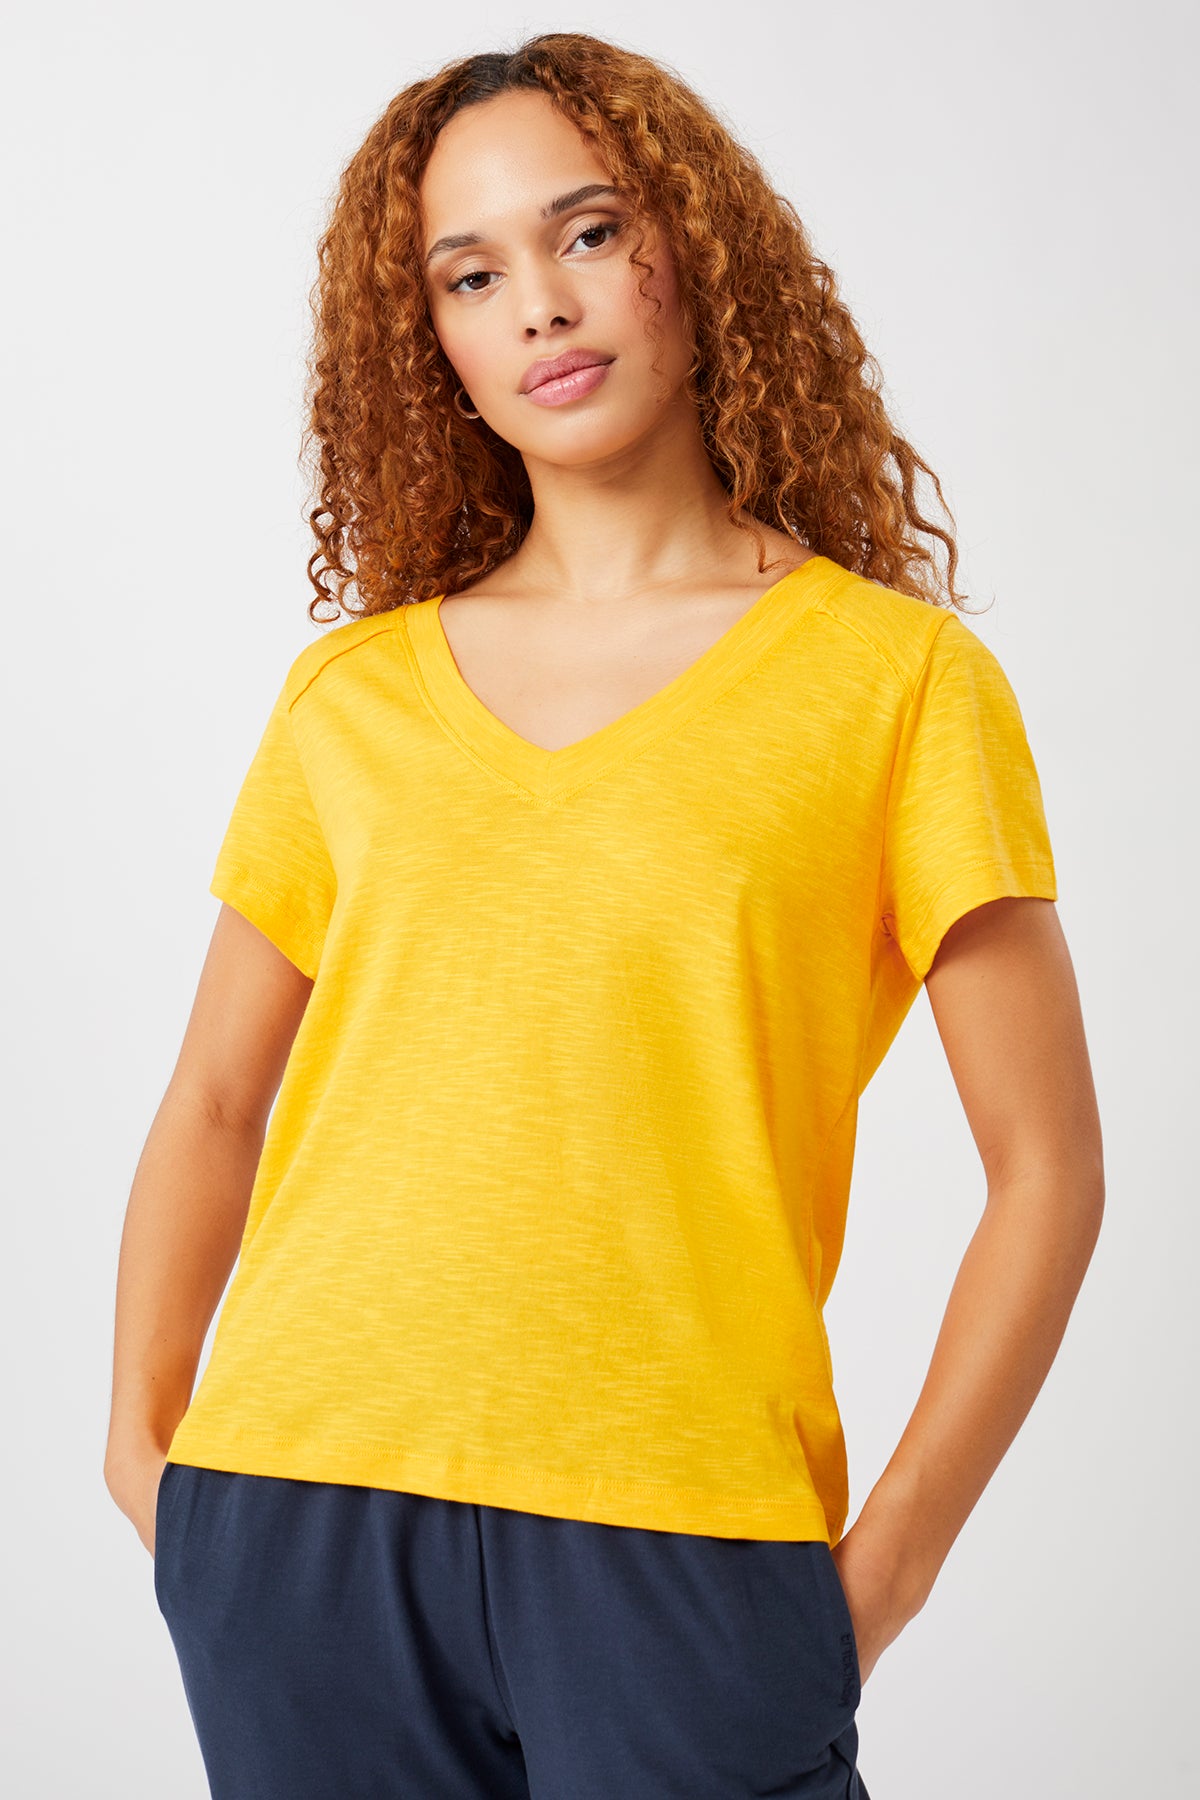 Mandala Yoga Shirt Gelb Front - The New V-Neck